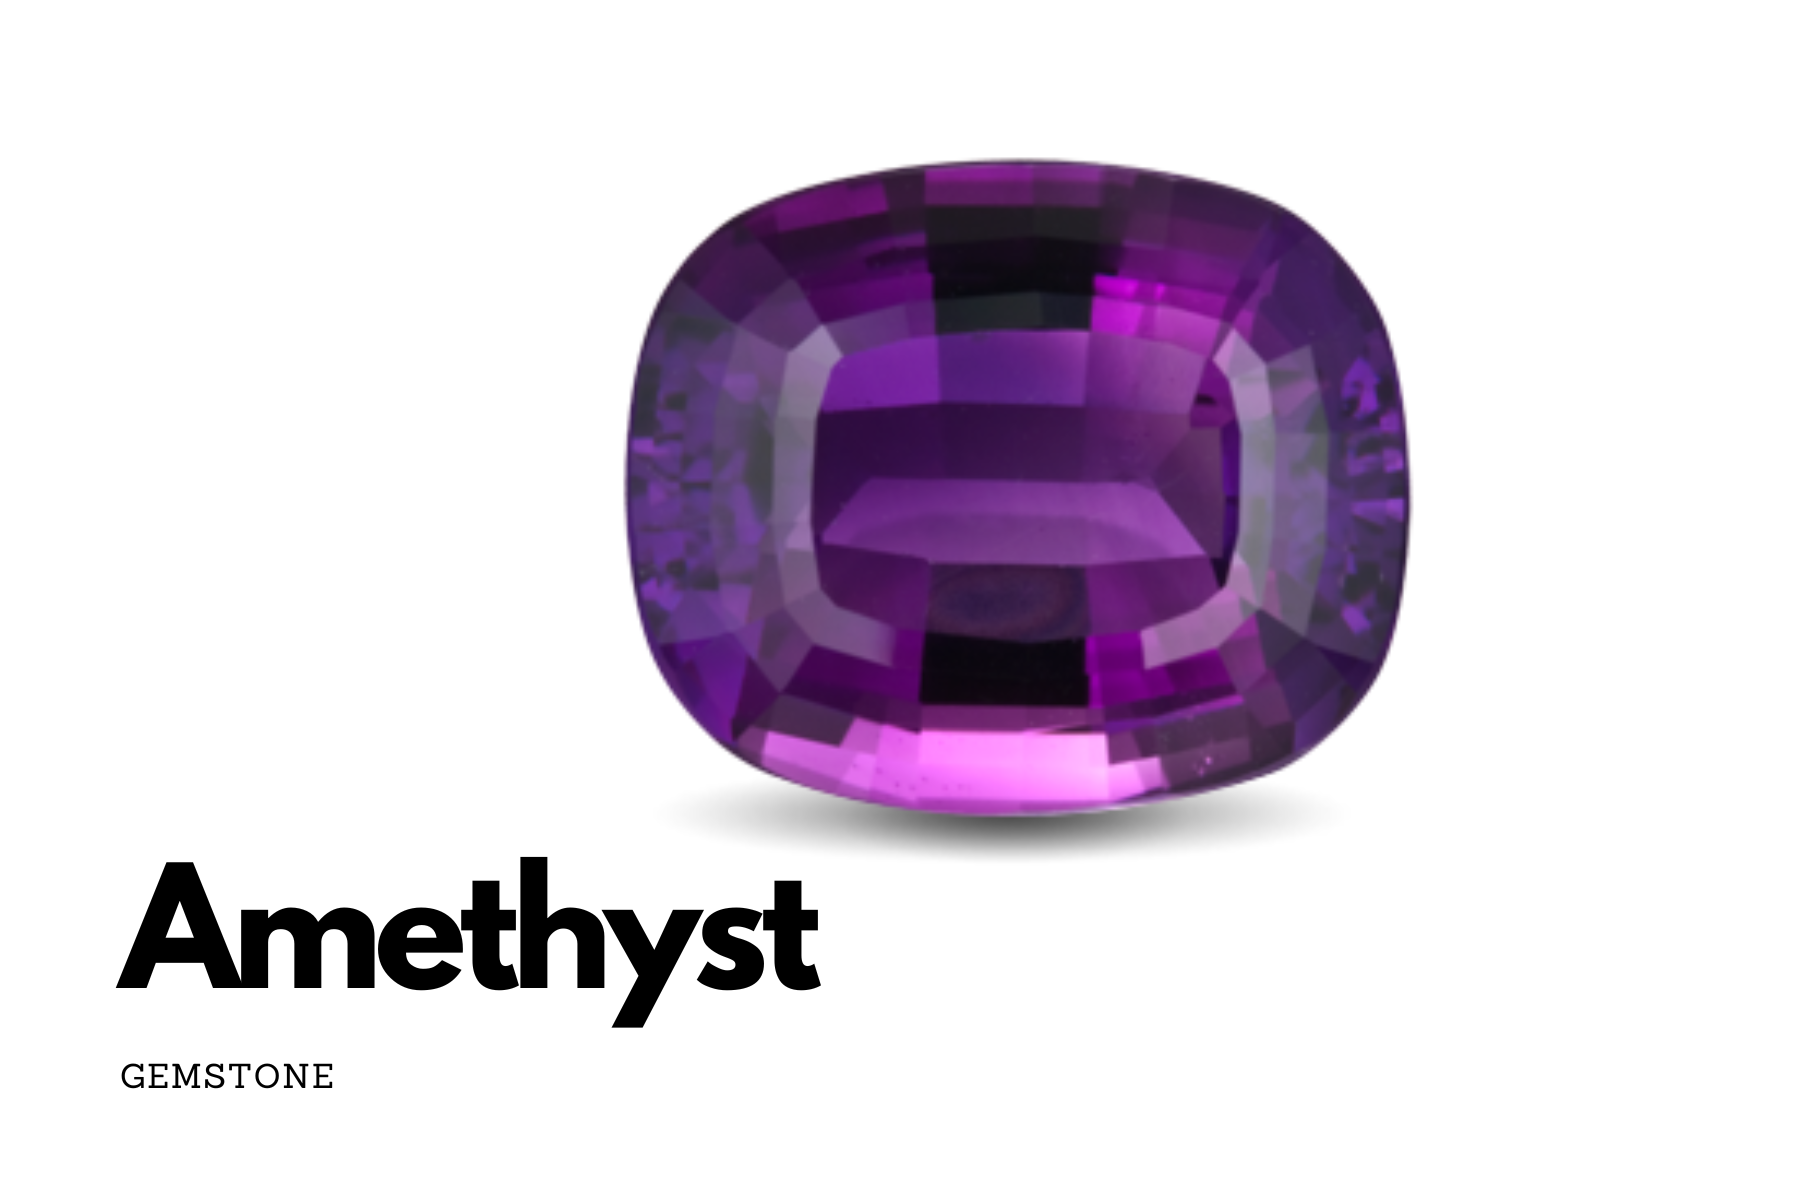 Smooth-cornered purple amethyst stone